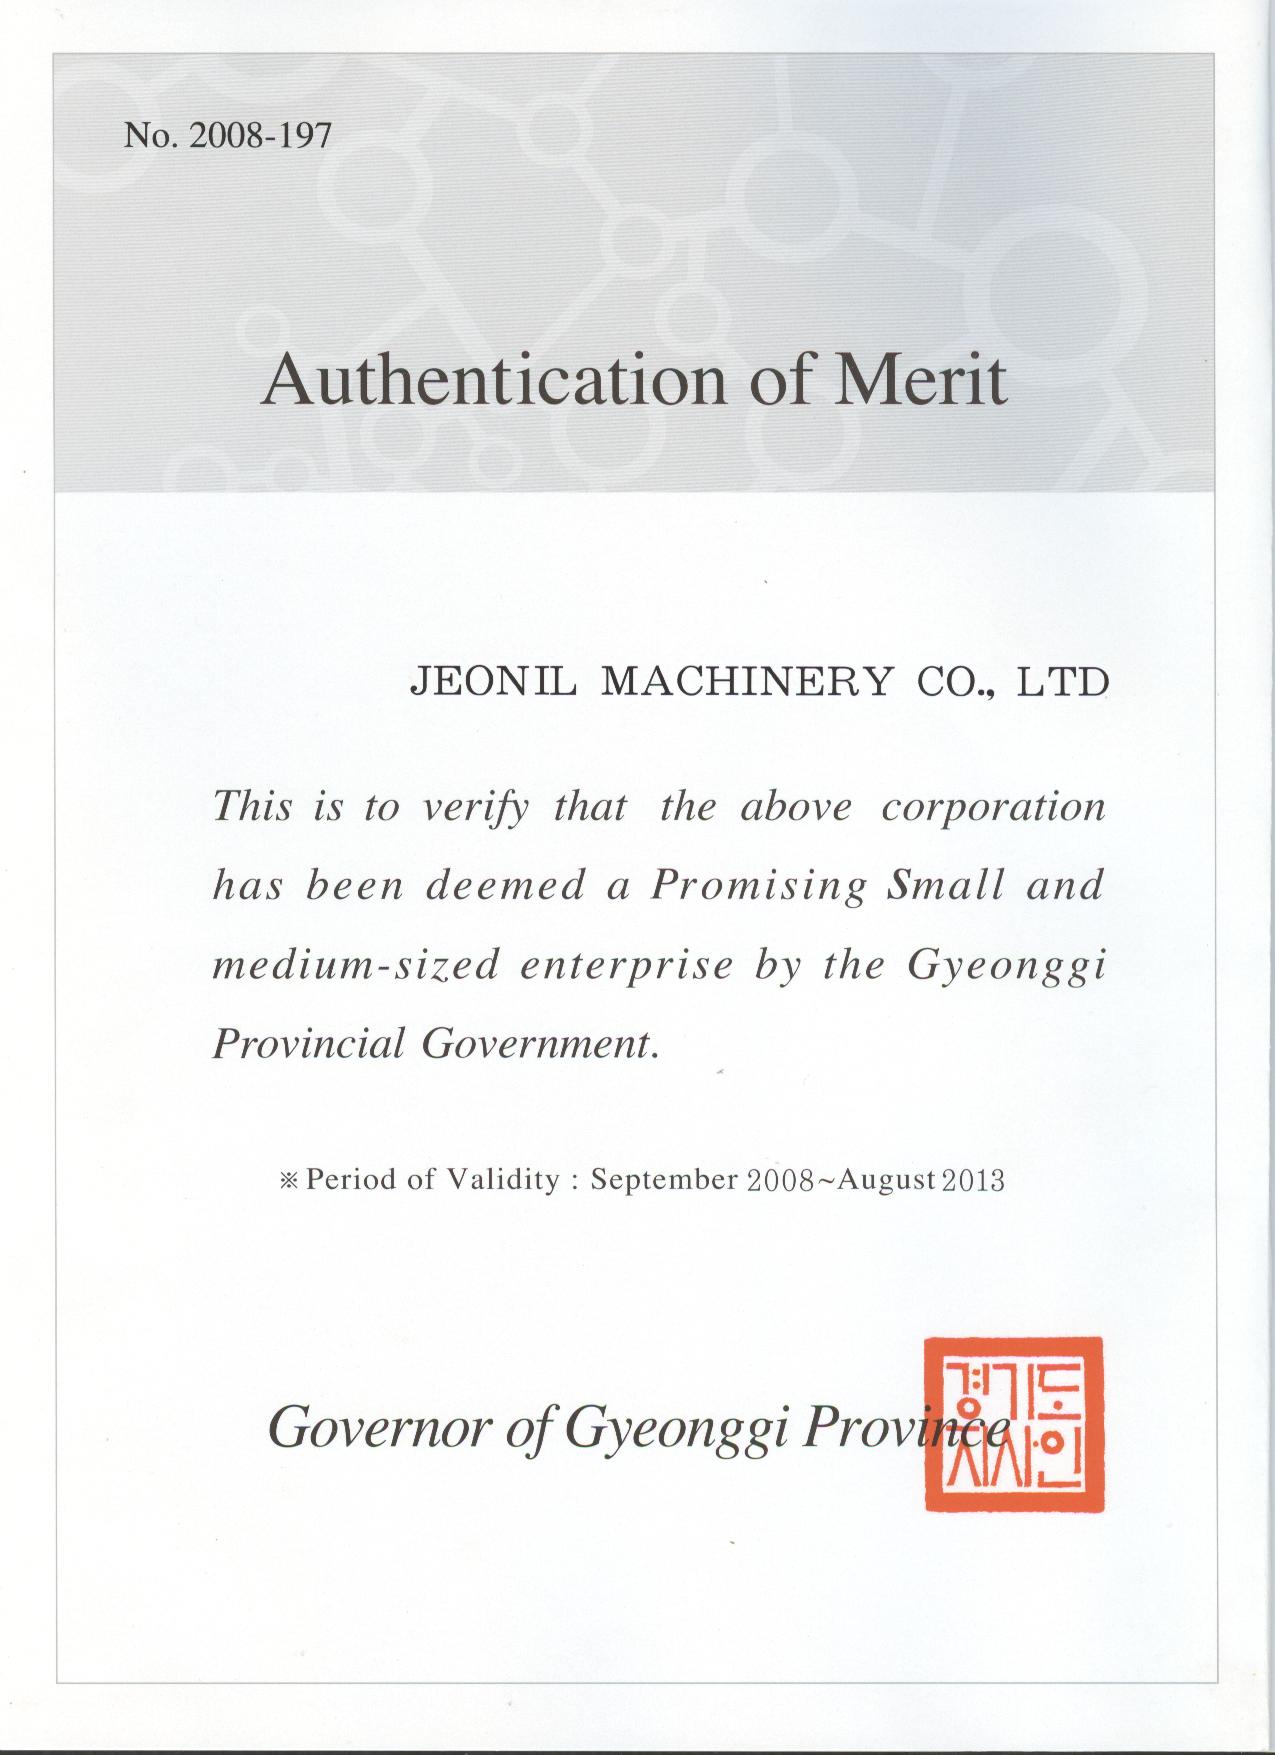 Certificate of Promising Small & Medium Enterprise by Gyeonggi province.jpg